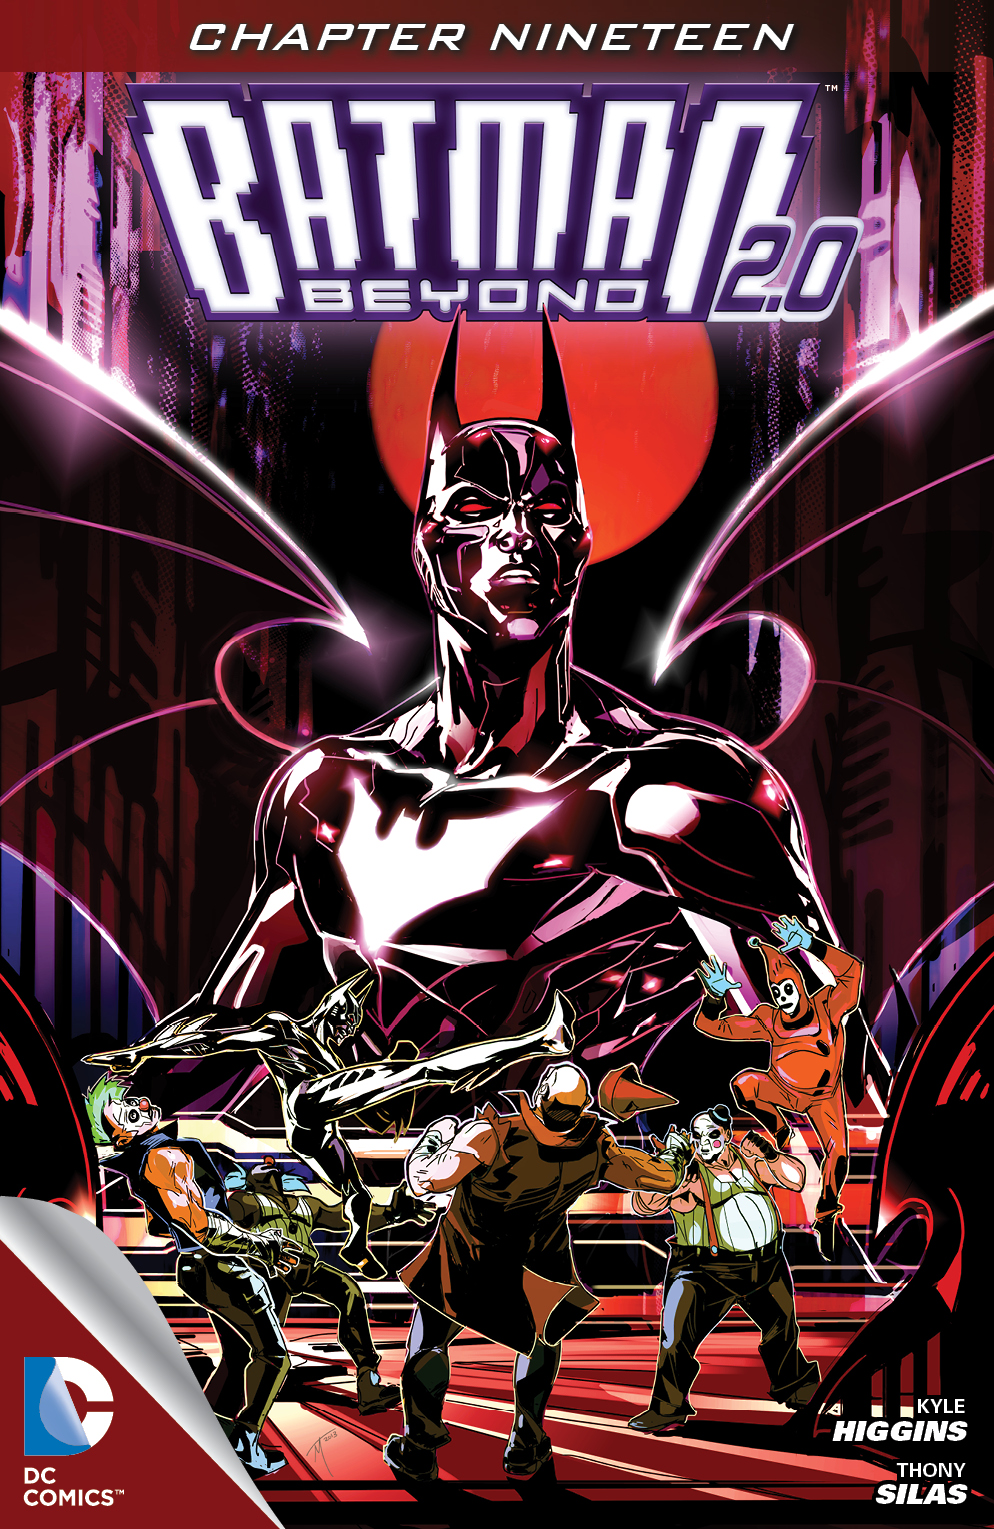 Batman Beyond 2.0 #19 preview images